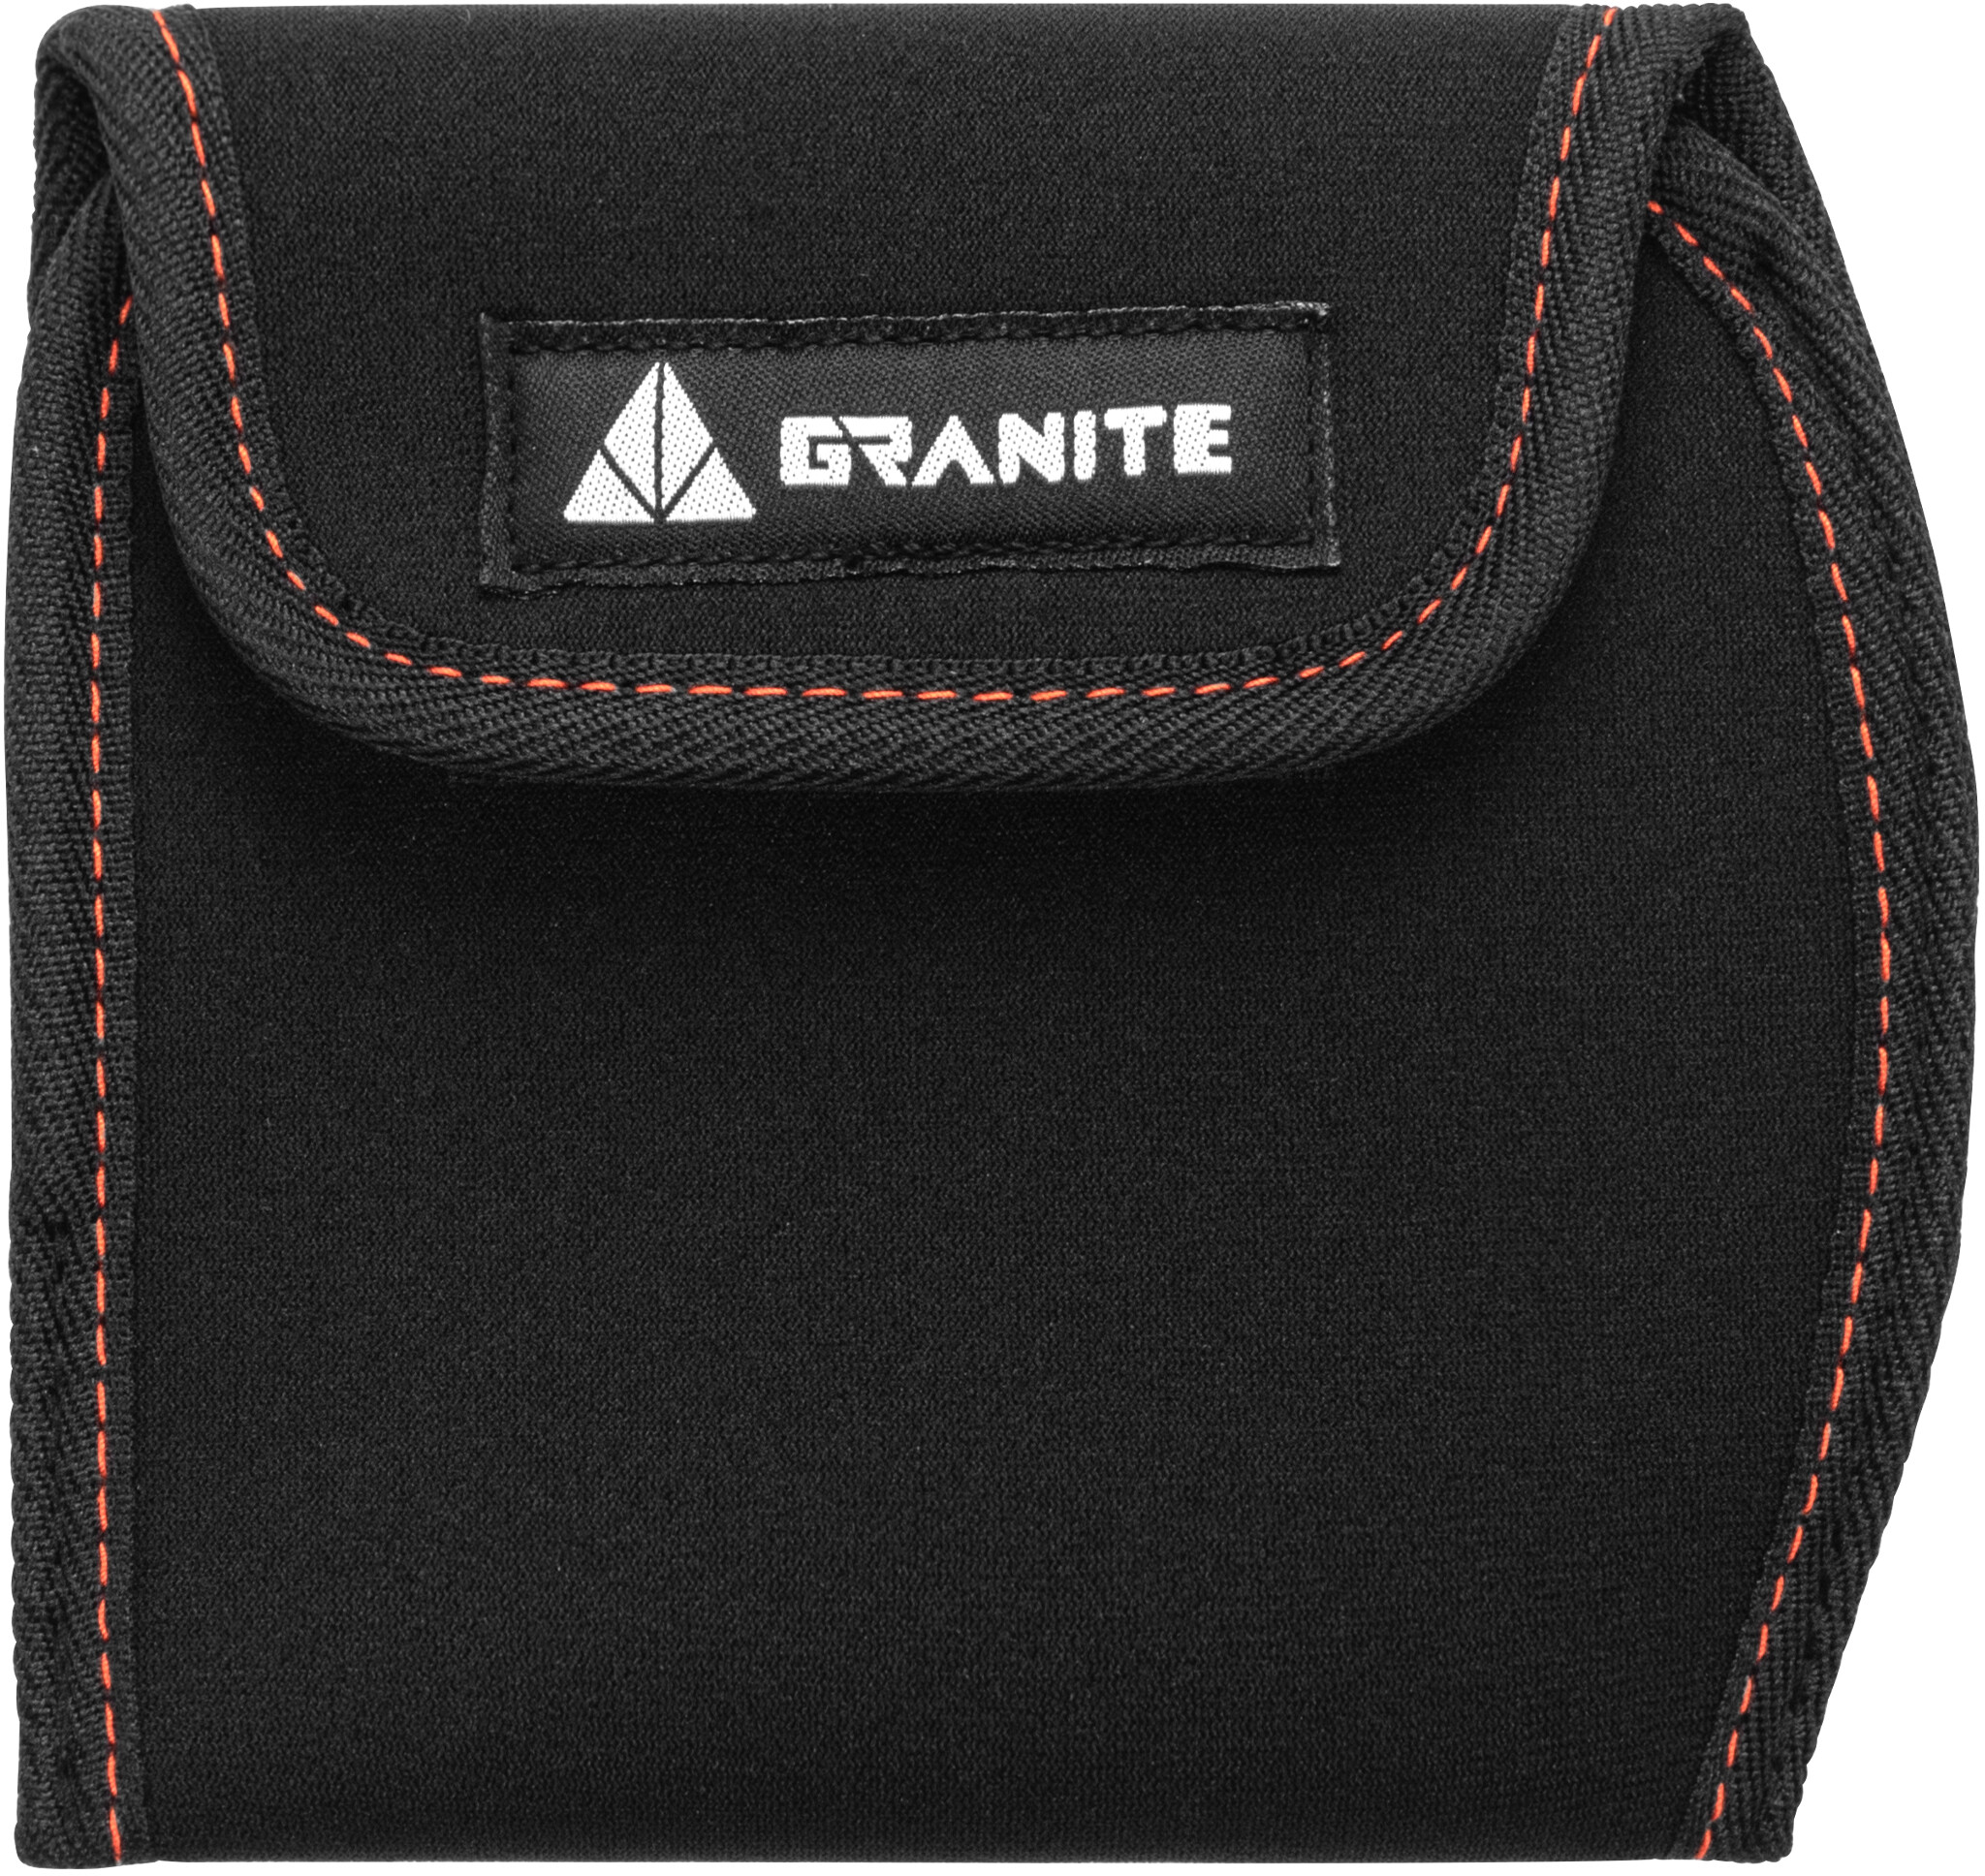 Granite Pita Pedal Cover | pedaler tilbehør